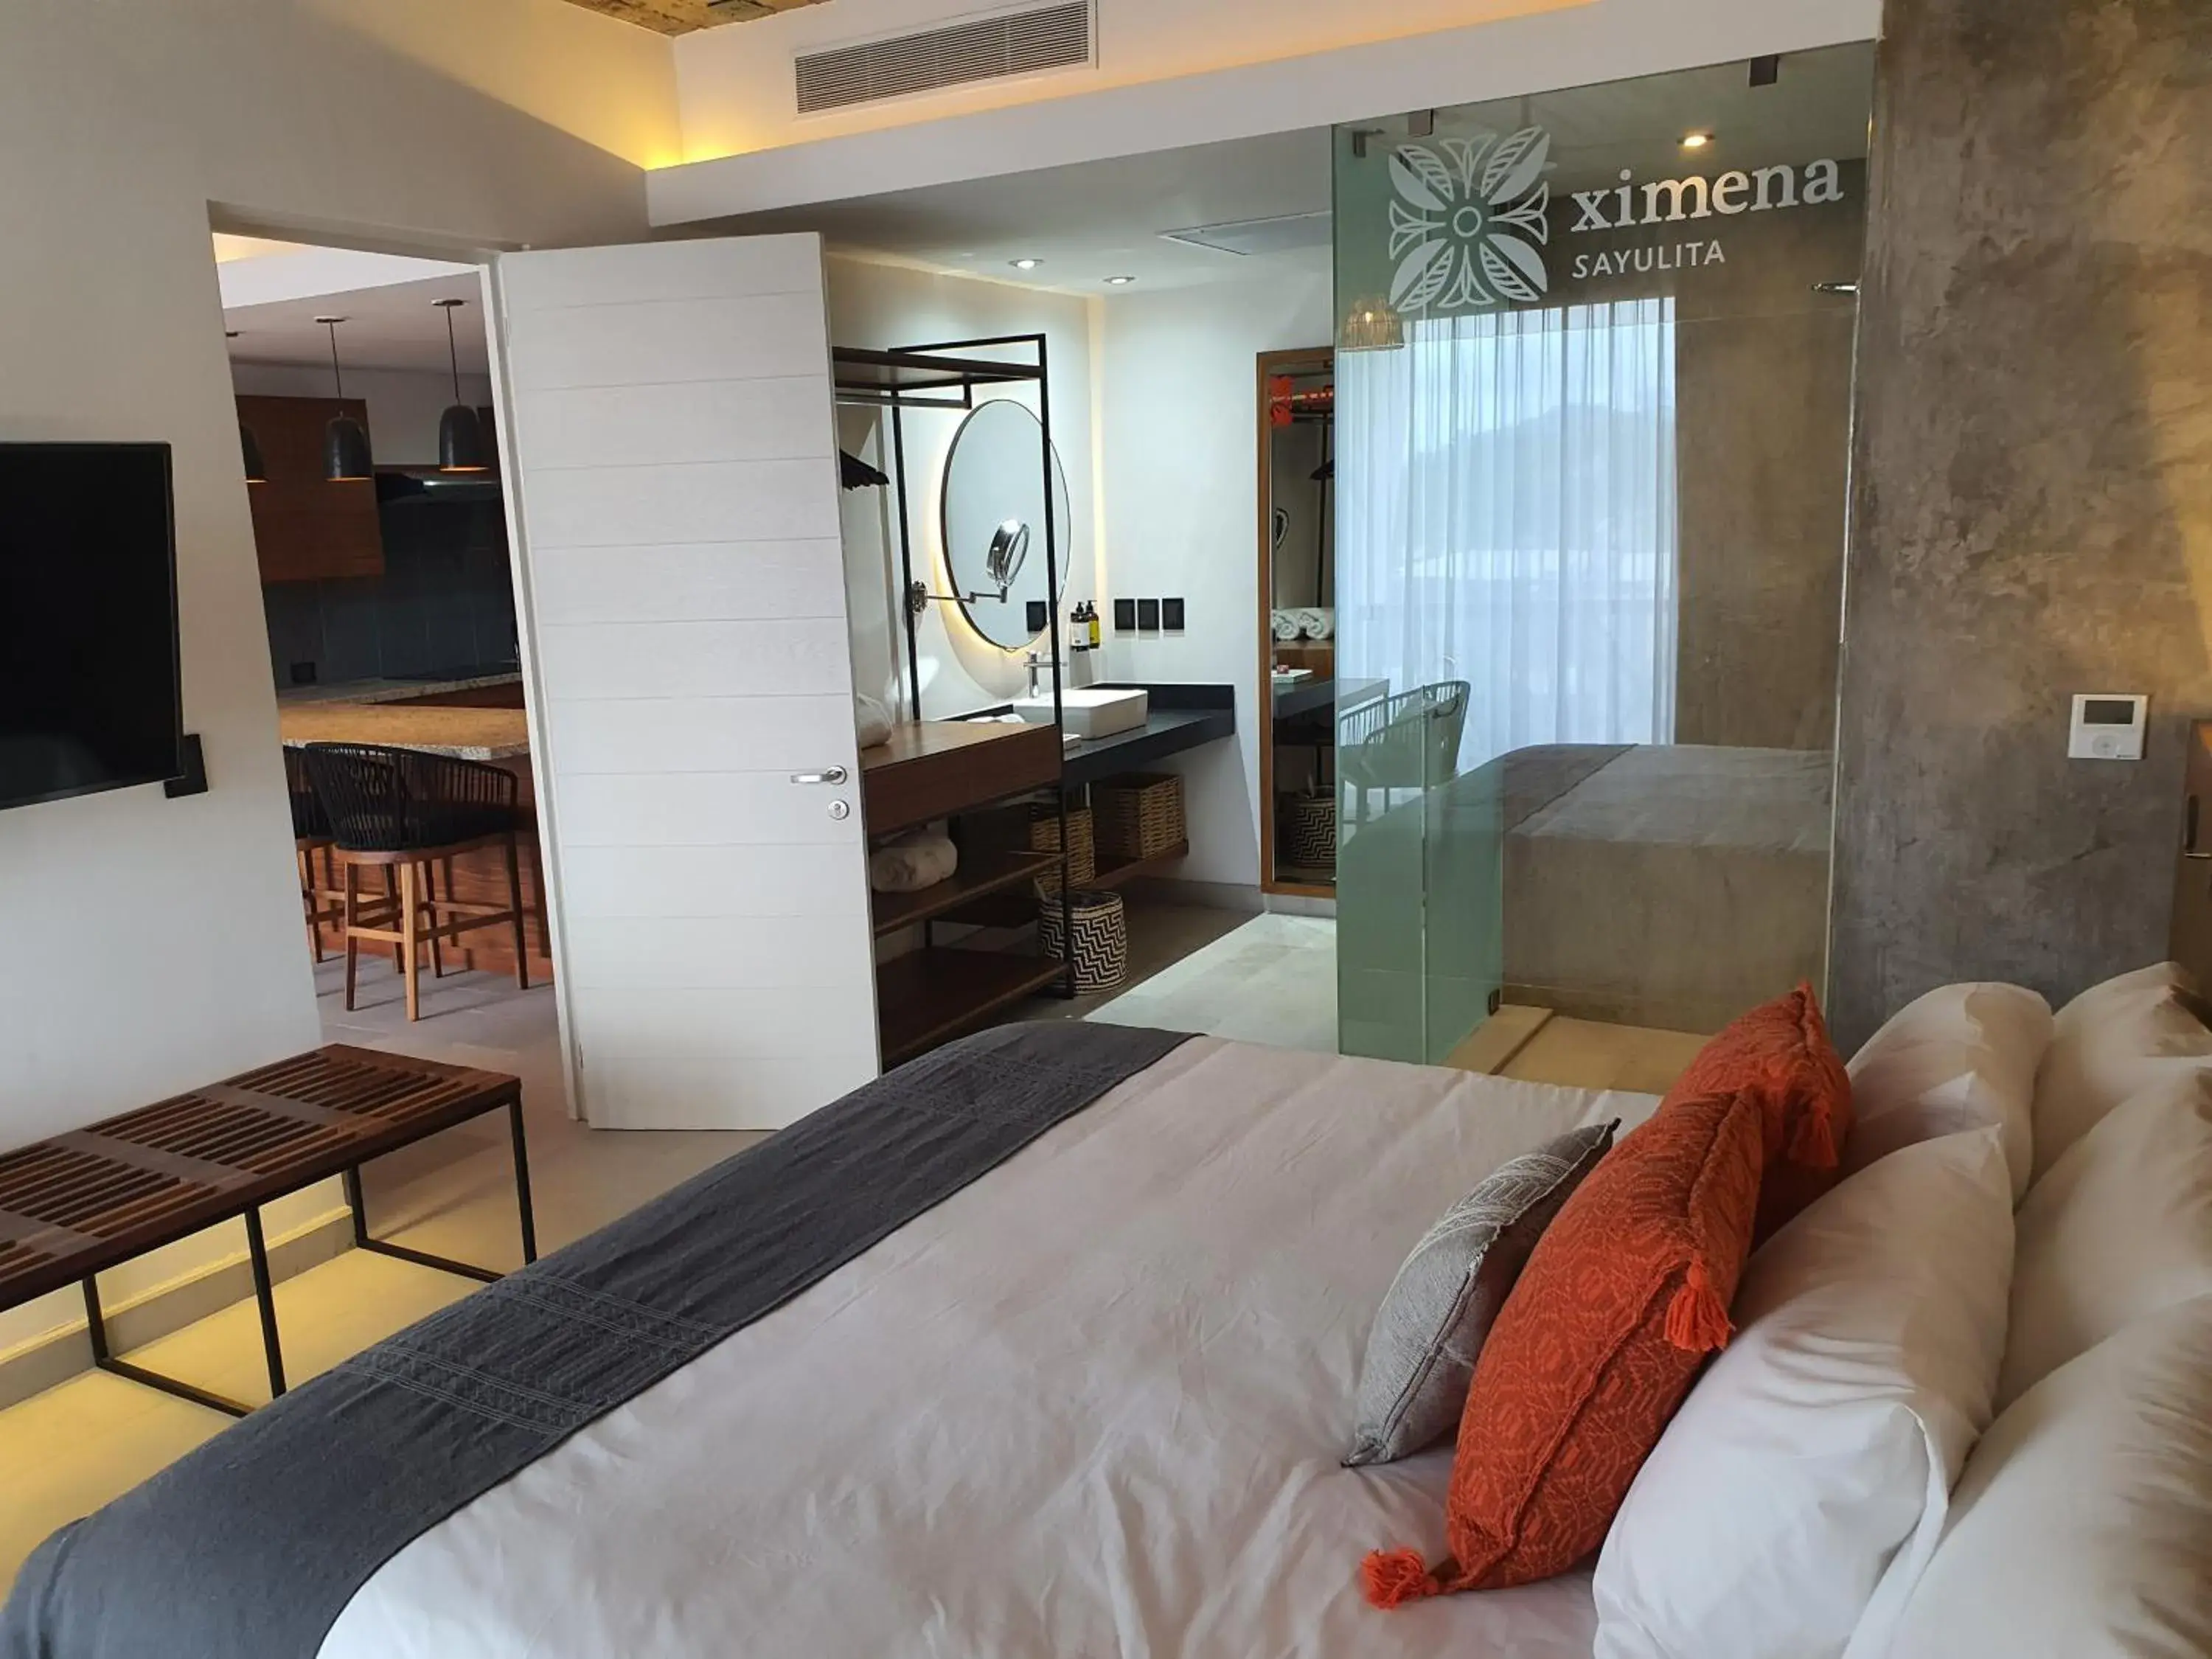 Bedroom in Ximena Hotel Boutique